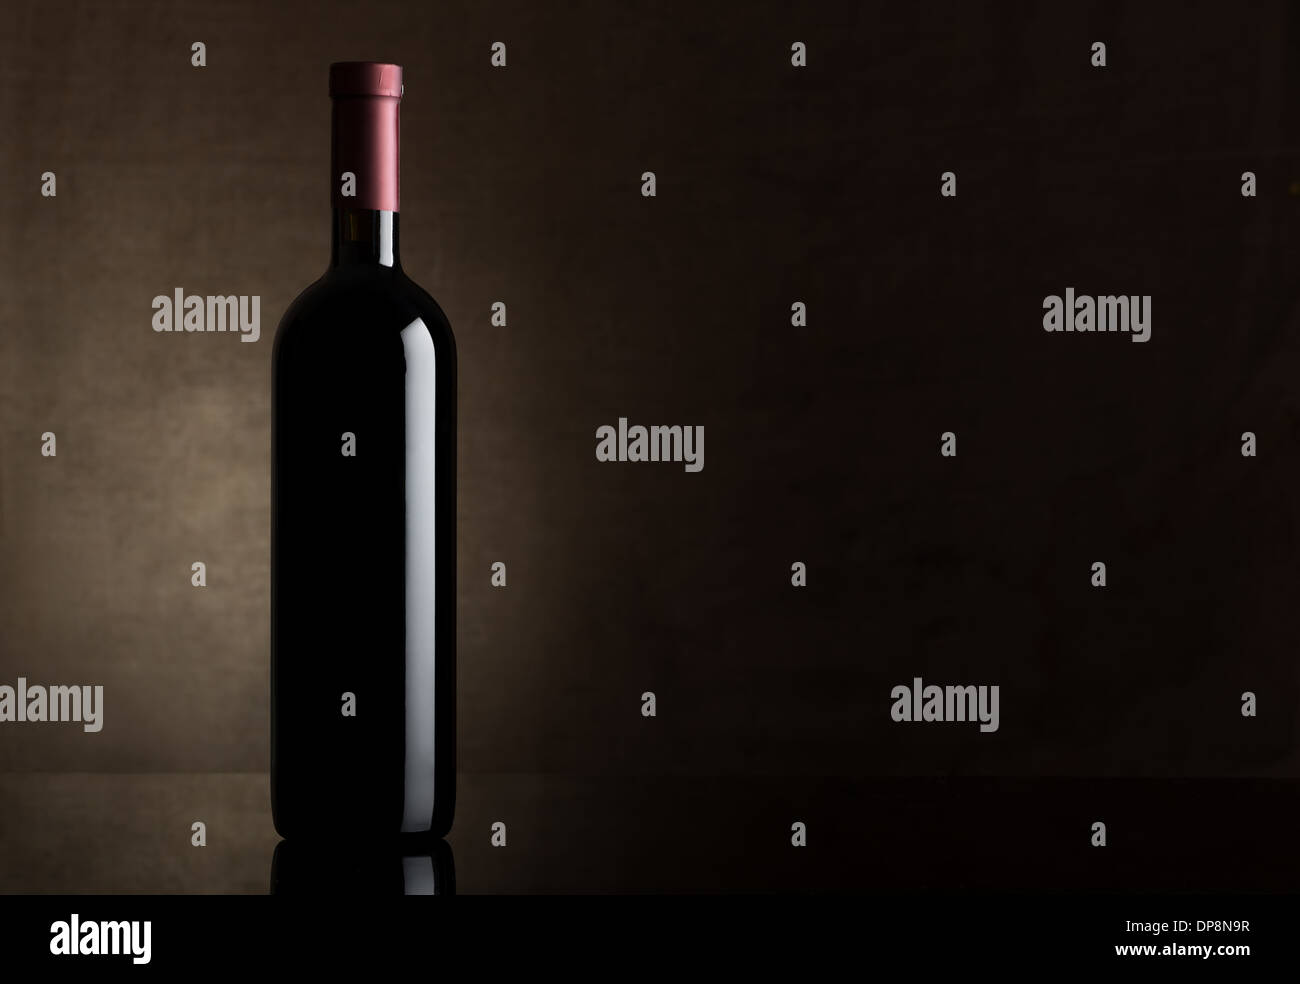 Black bottle of wine on a dark background Stock Photo